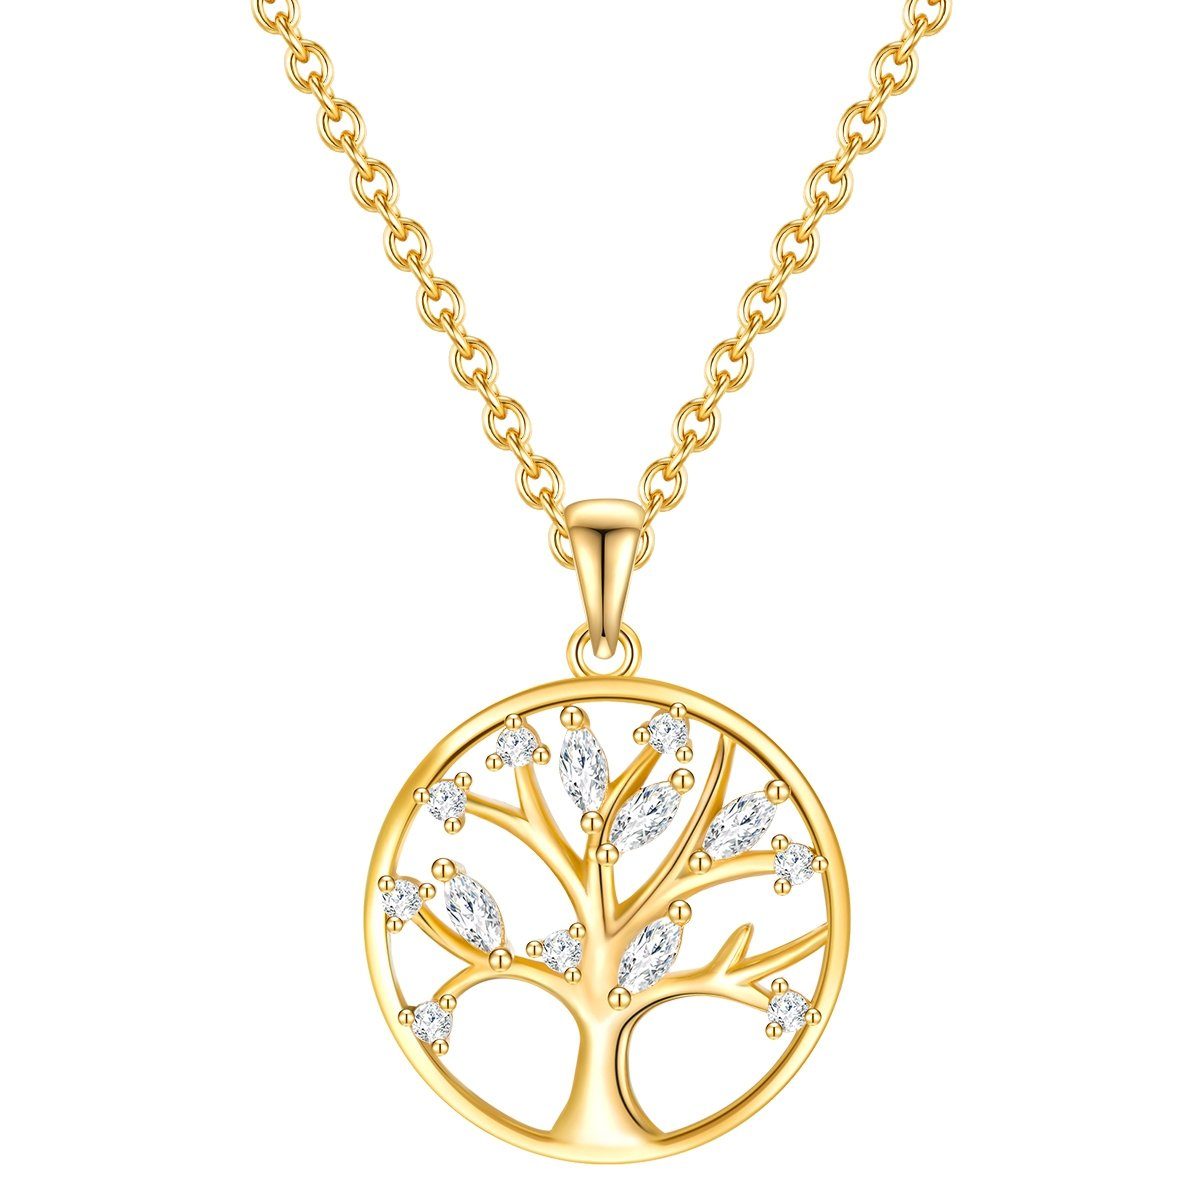 Rafaela Donata Silberkette Silber Sterling aus gelbgold, des Lebens Baum